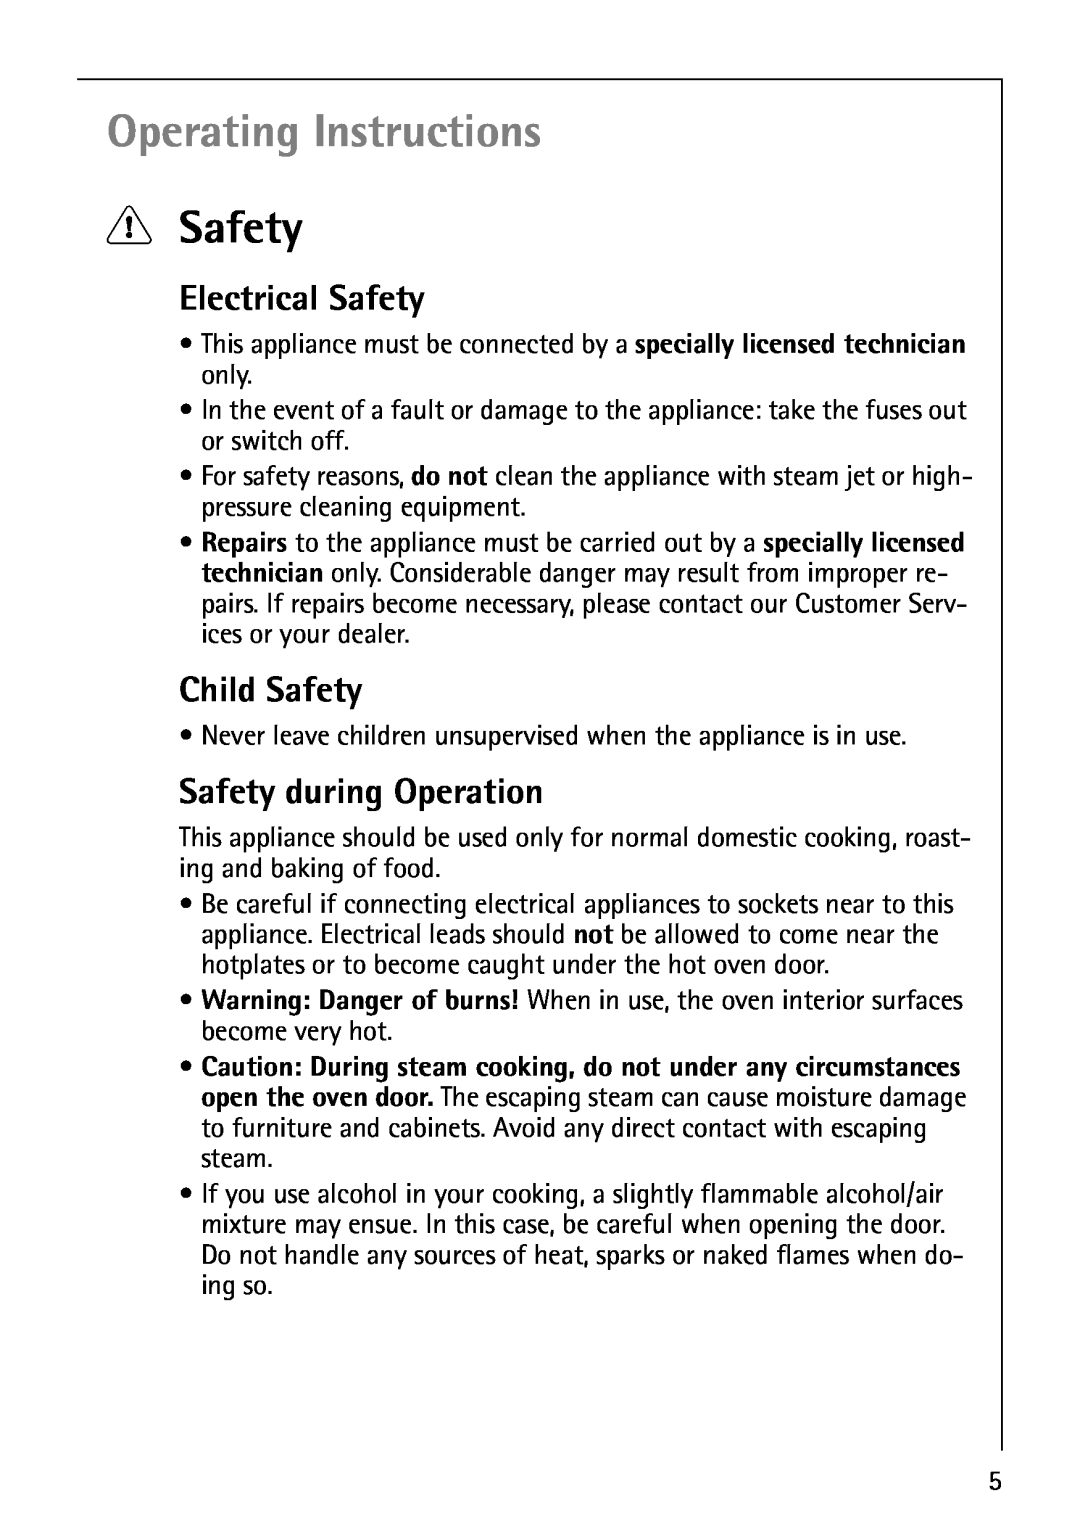 AEG B8920-1 manual Operating Instructions, 1Safety, Electrical Safety, Child Safety, Safety during Operation 